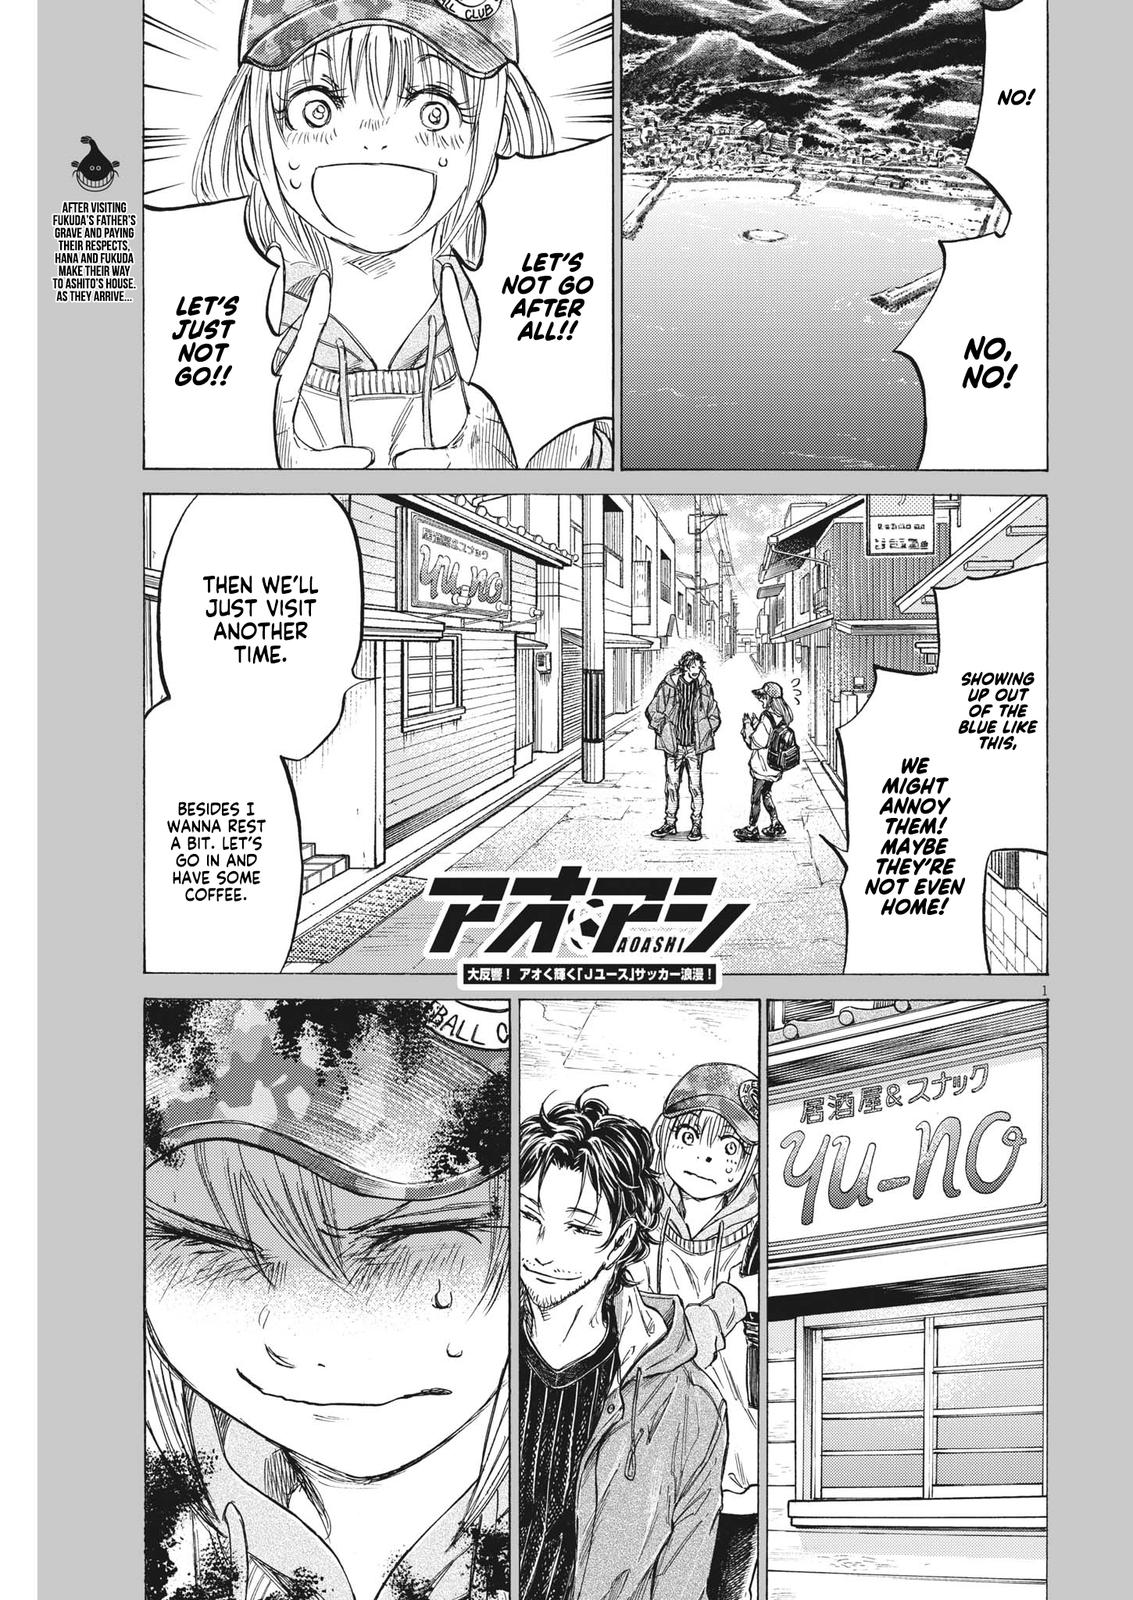 Read Manga Ao Ashi - Chapter 345